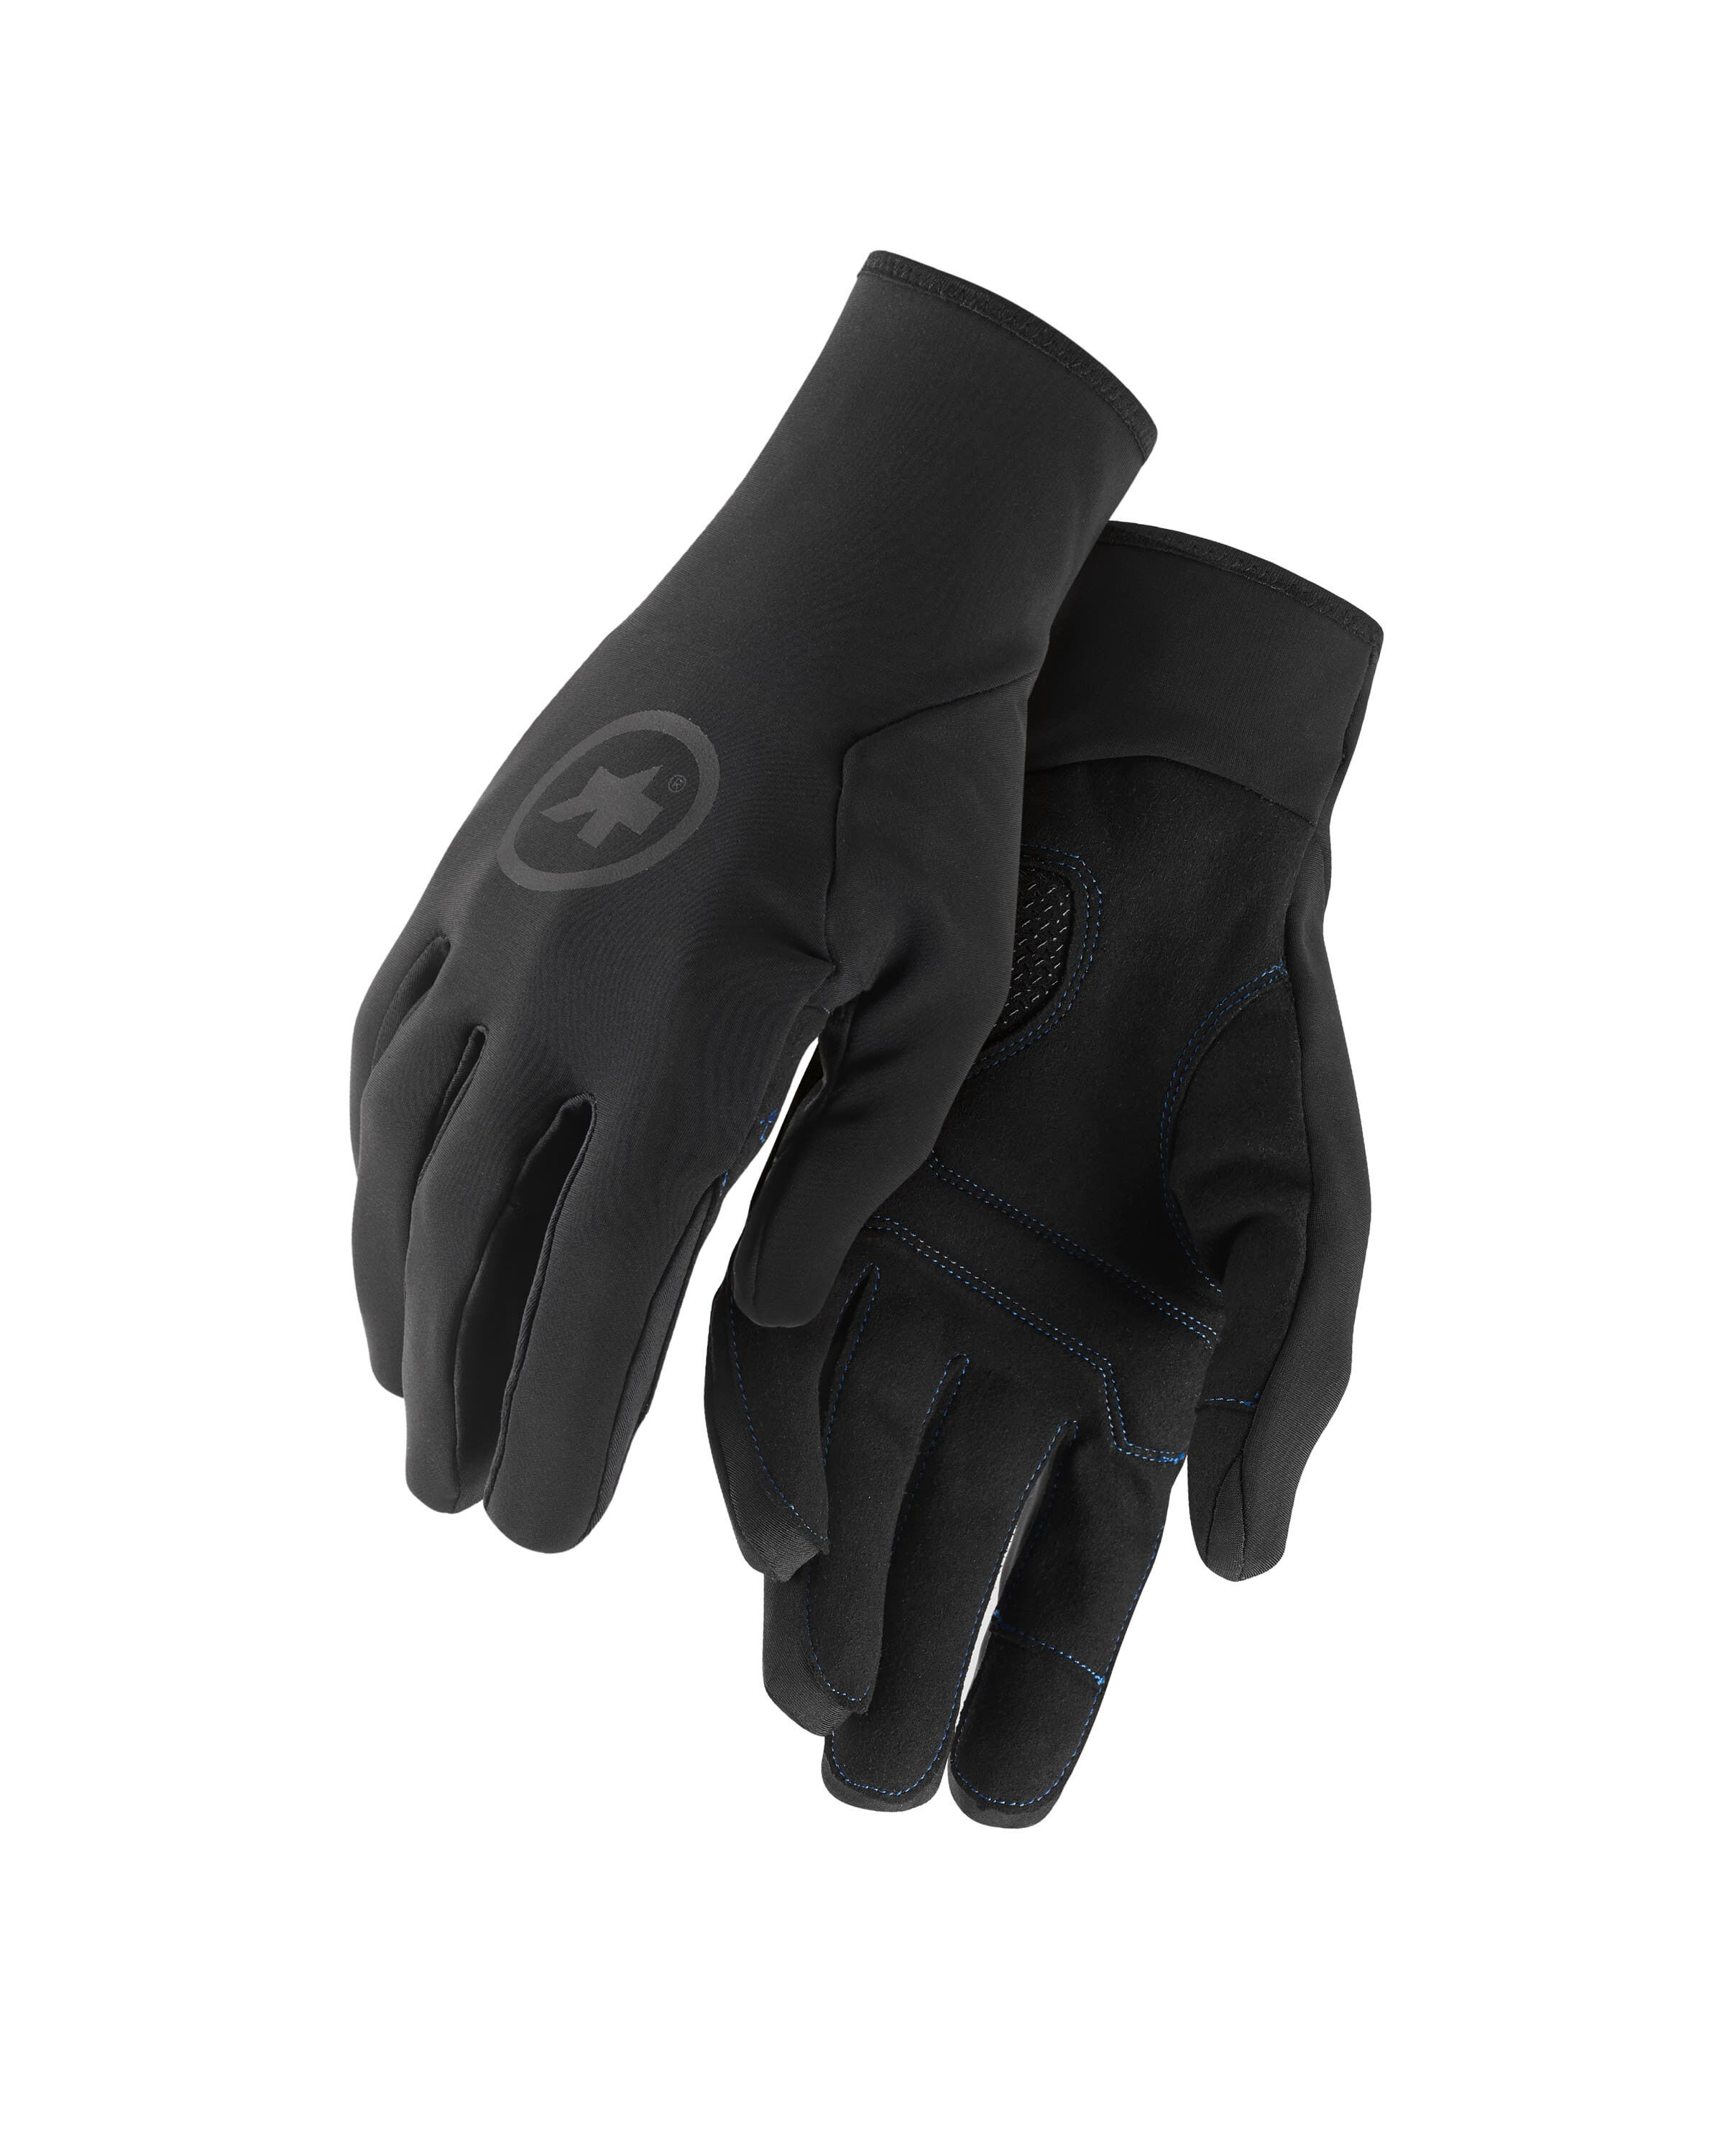 Assos Winter Gloves - Guantes ciclismo